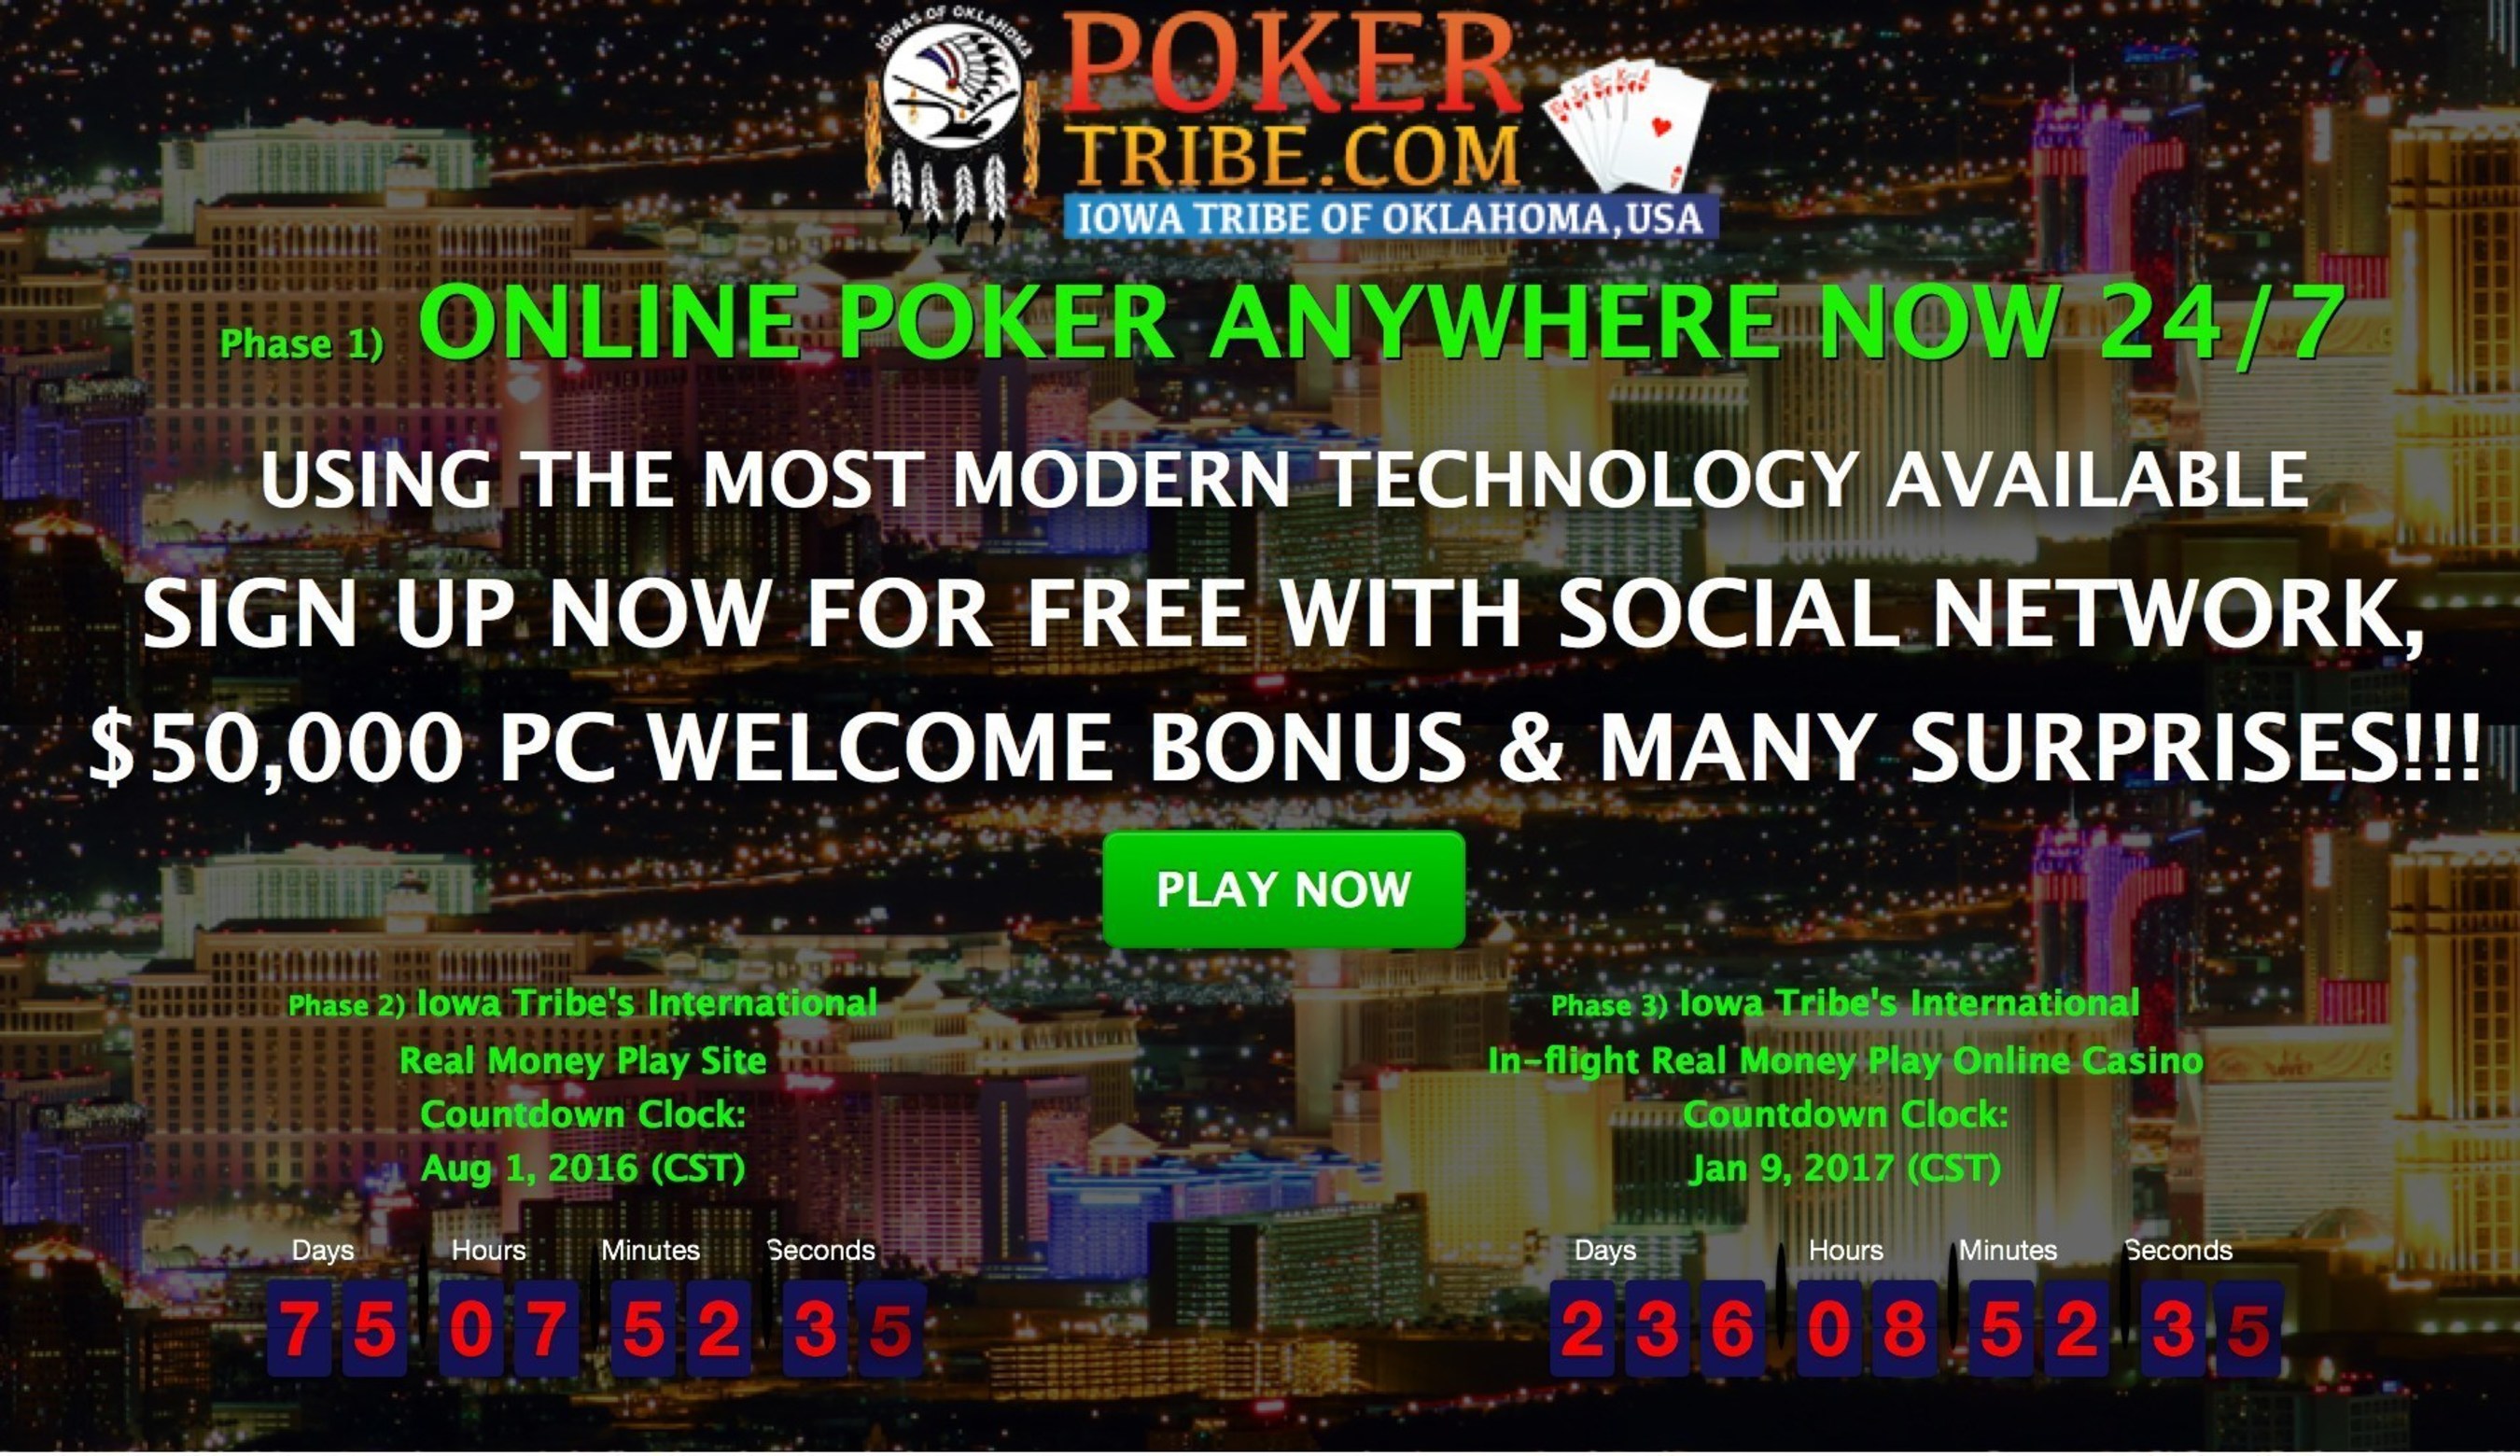 PokerTribe.com